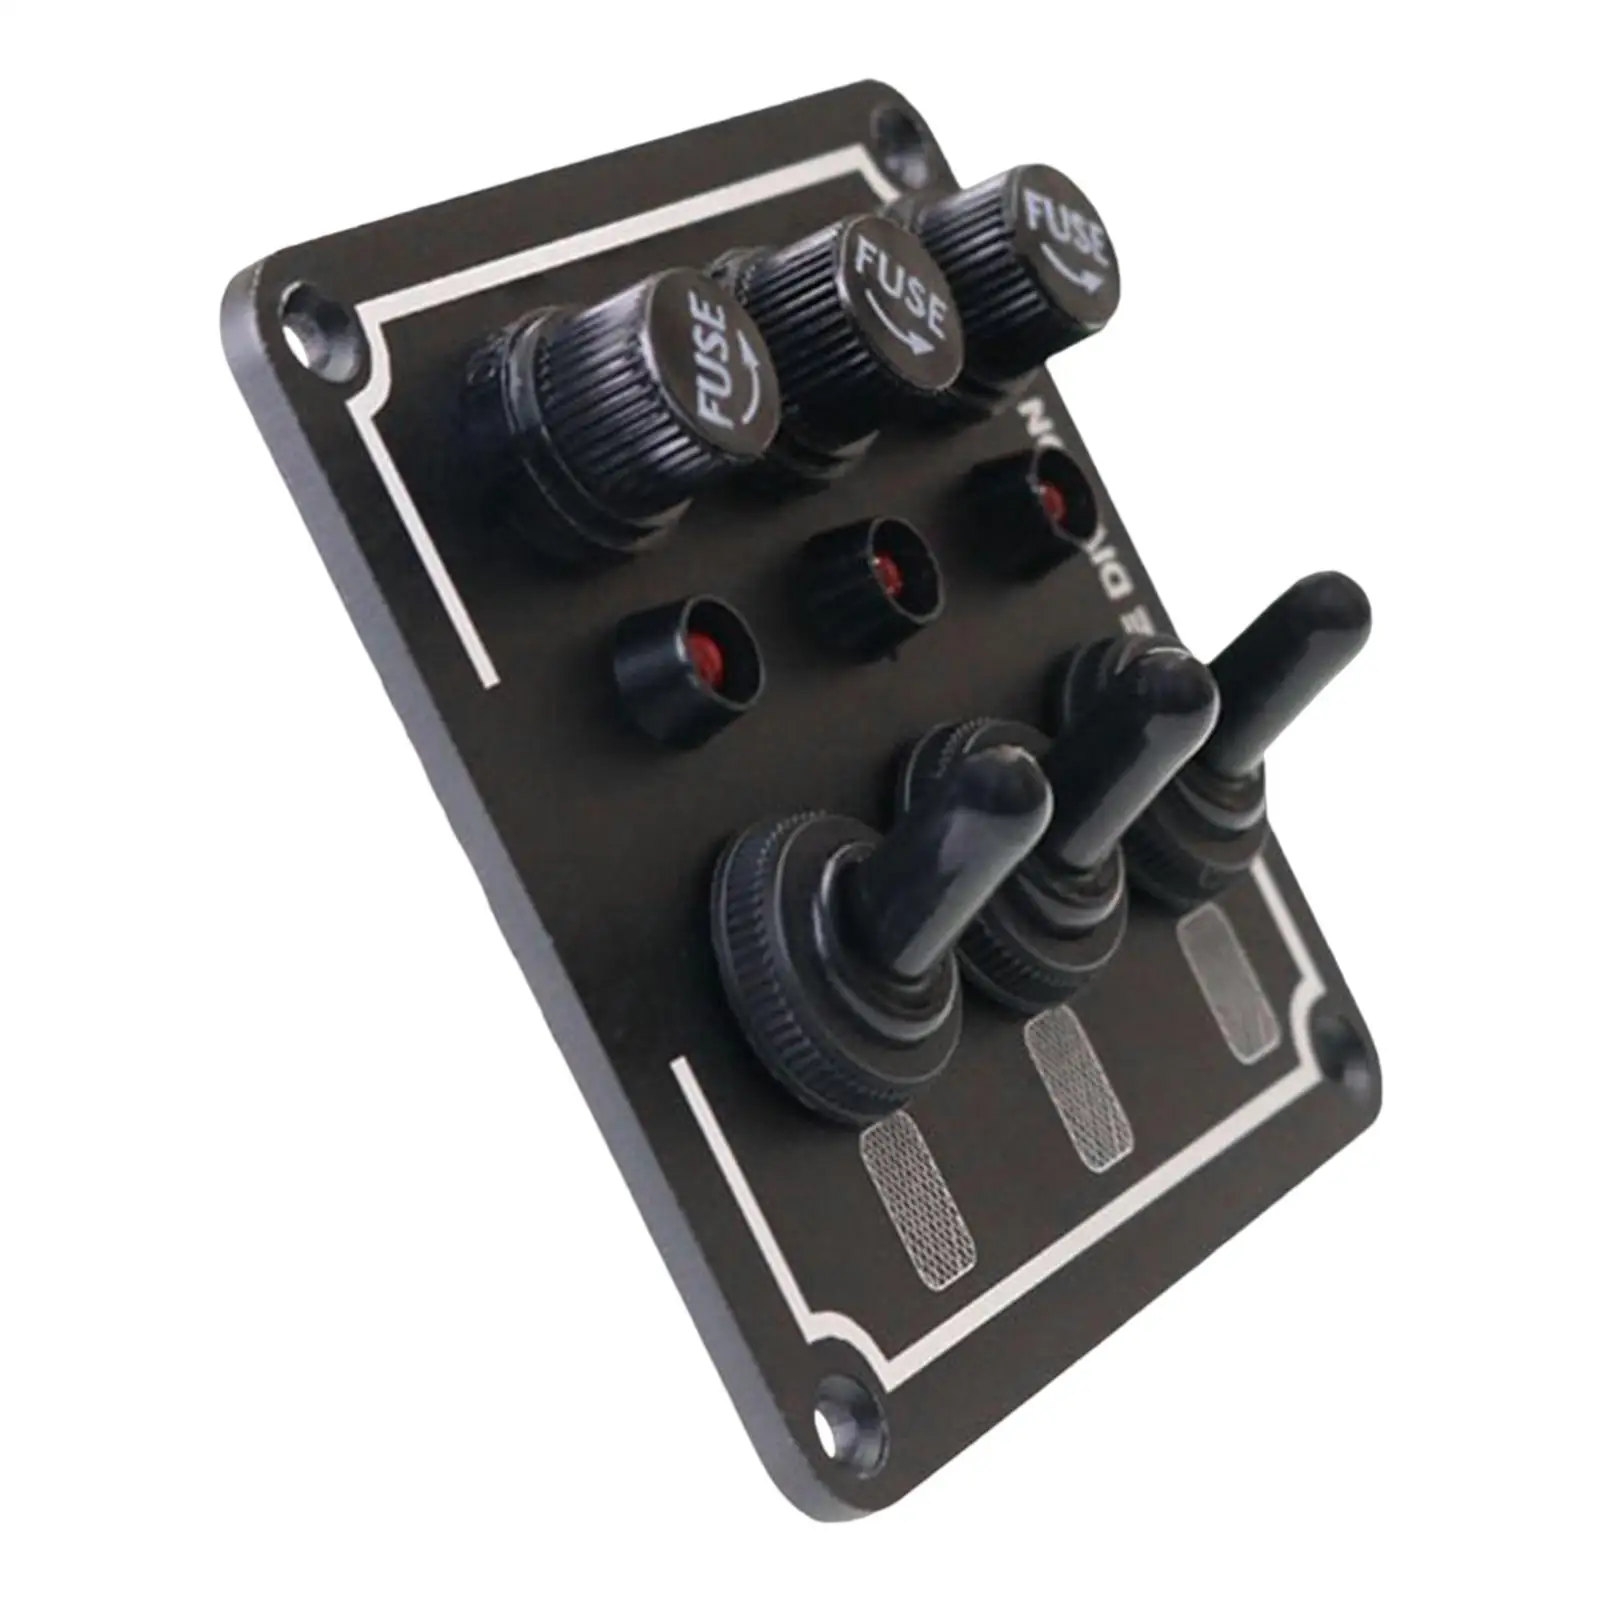 Marine Rocker Switch Panel, 12V-24V with LED Indication, for Yachts Cars ATV Install Professional.